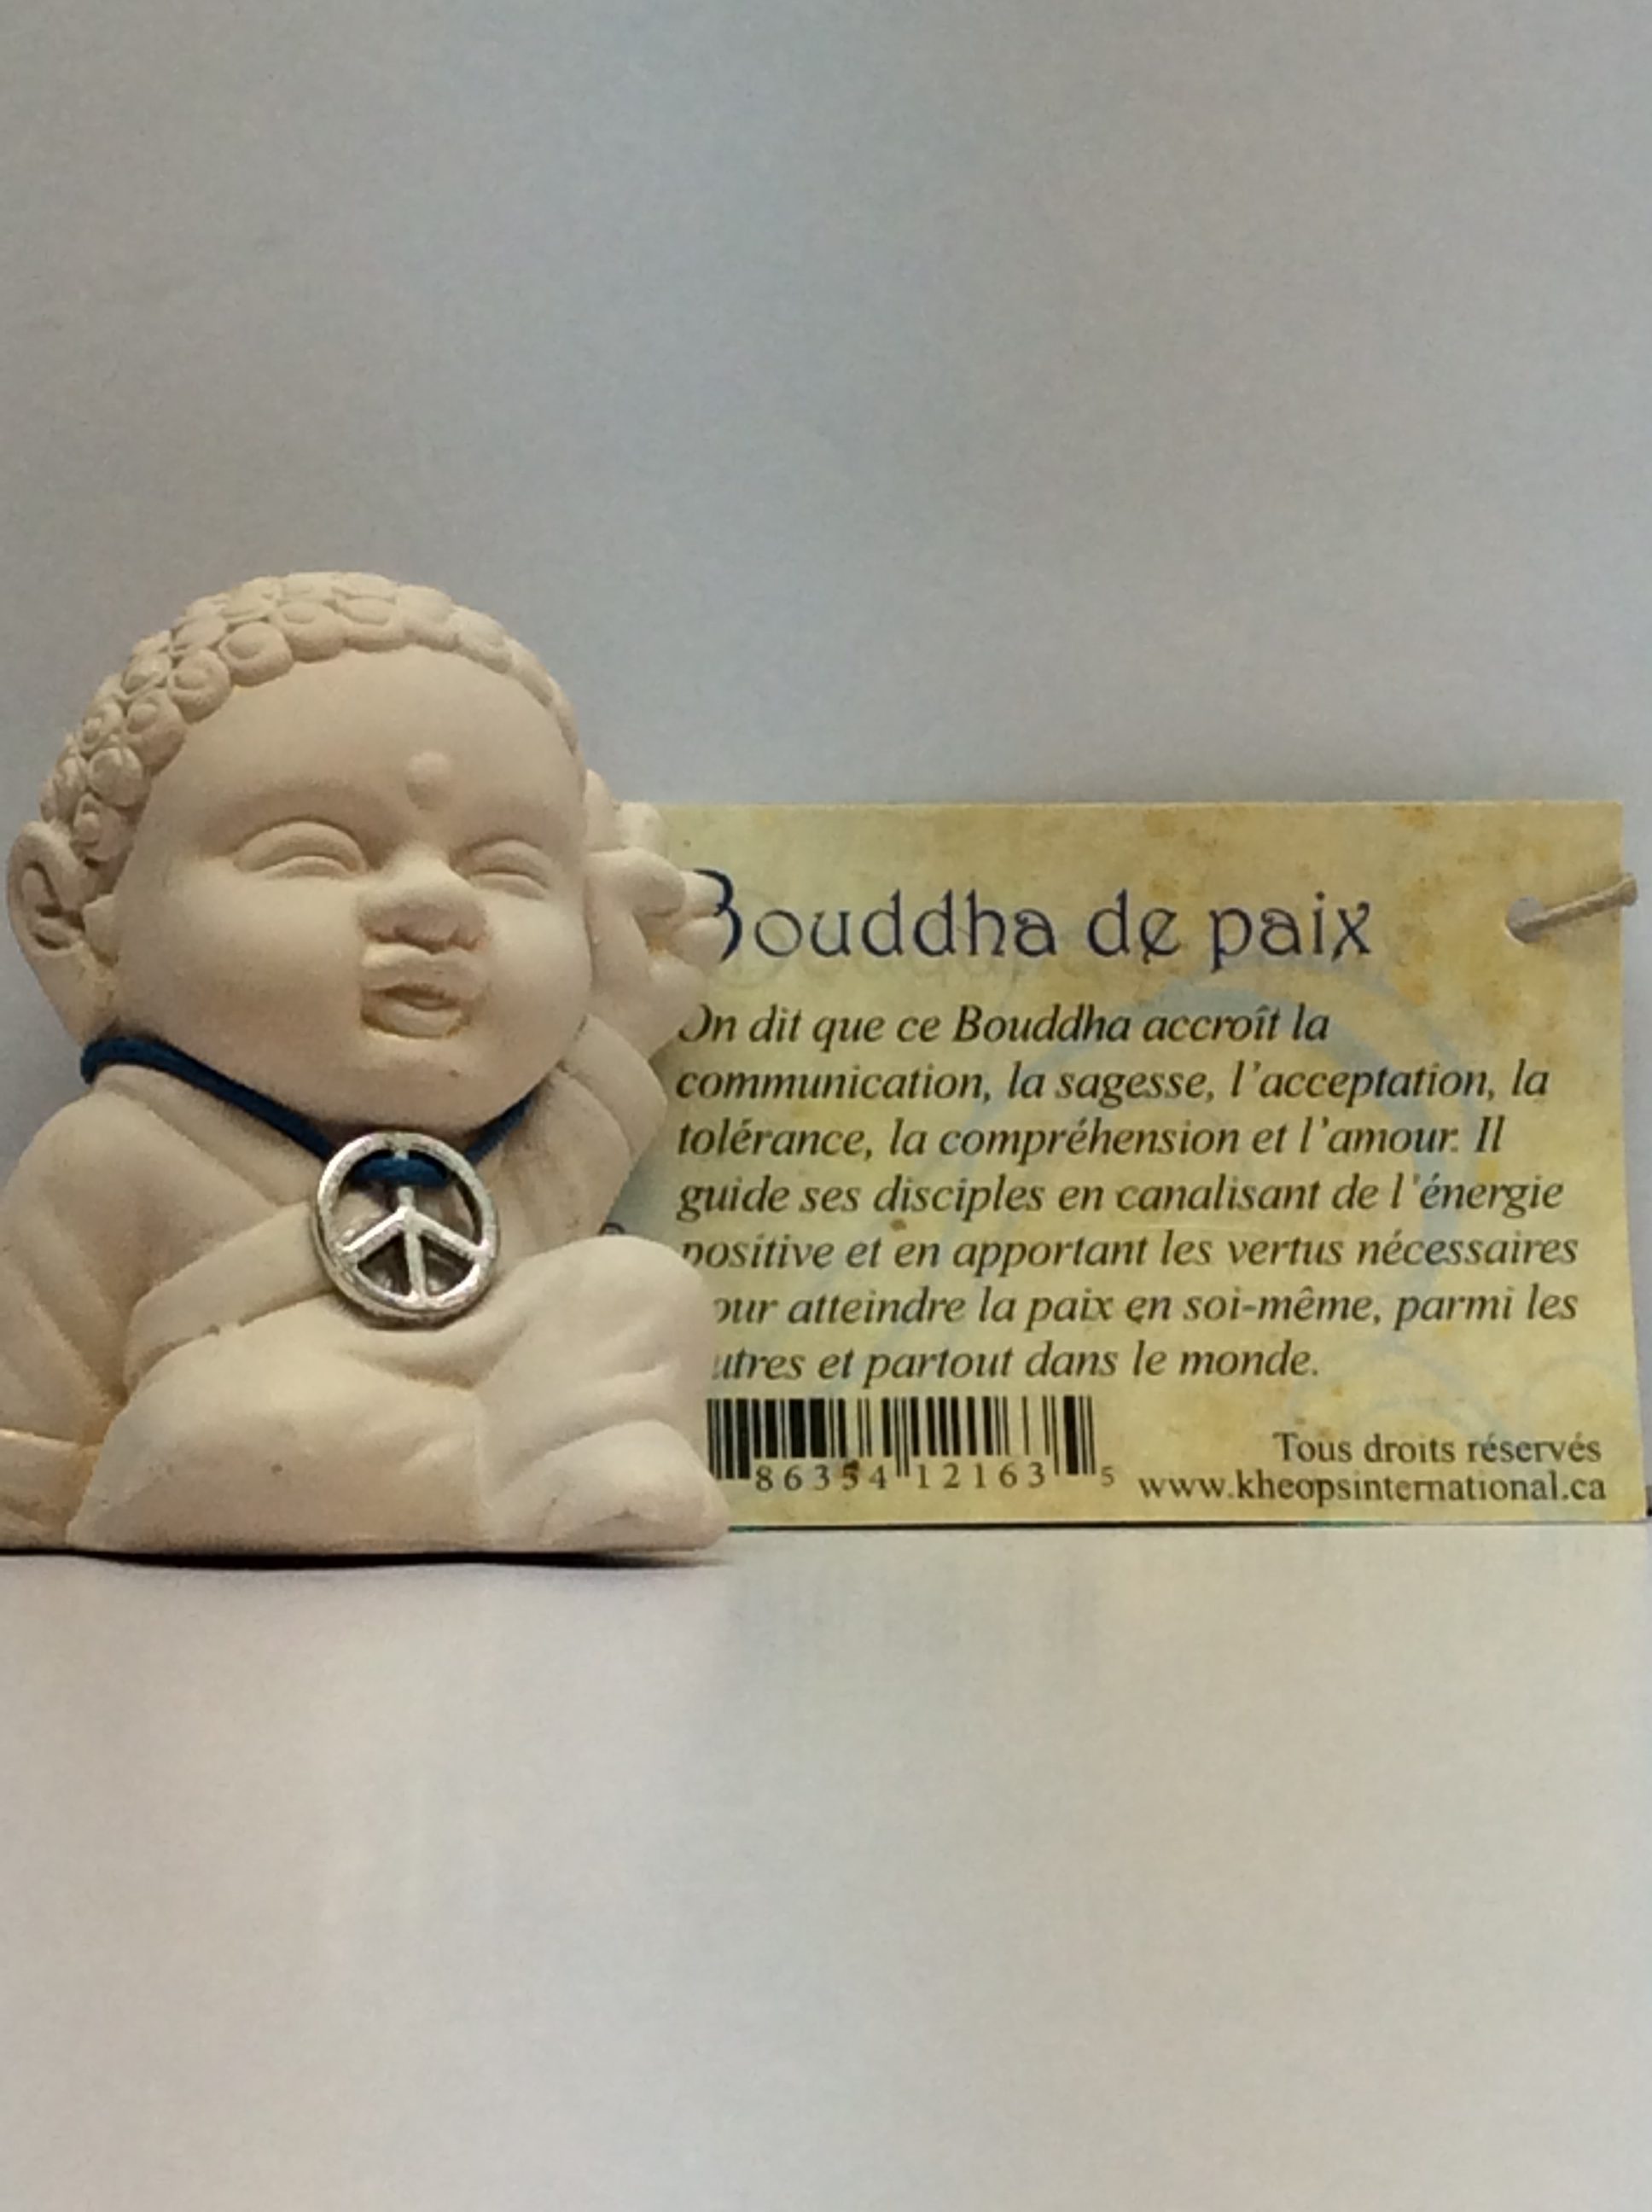 Bouddha de paix